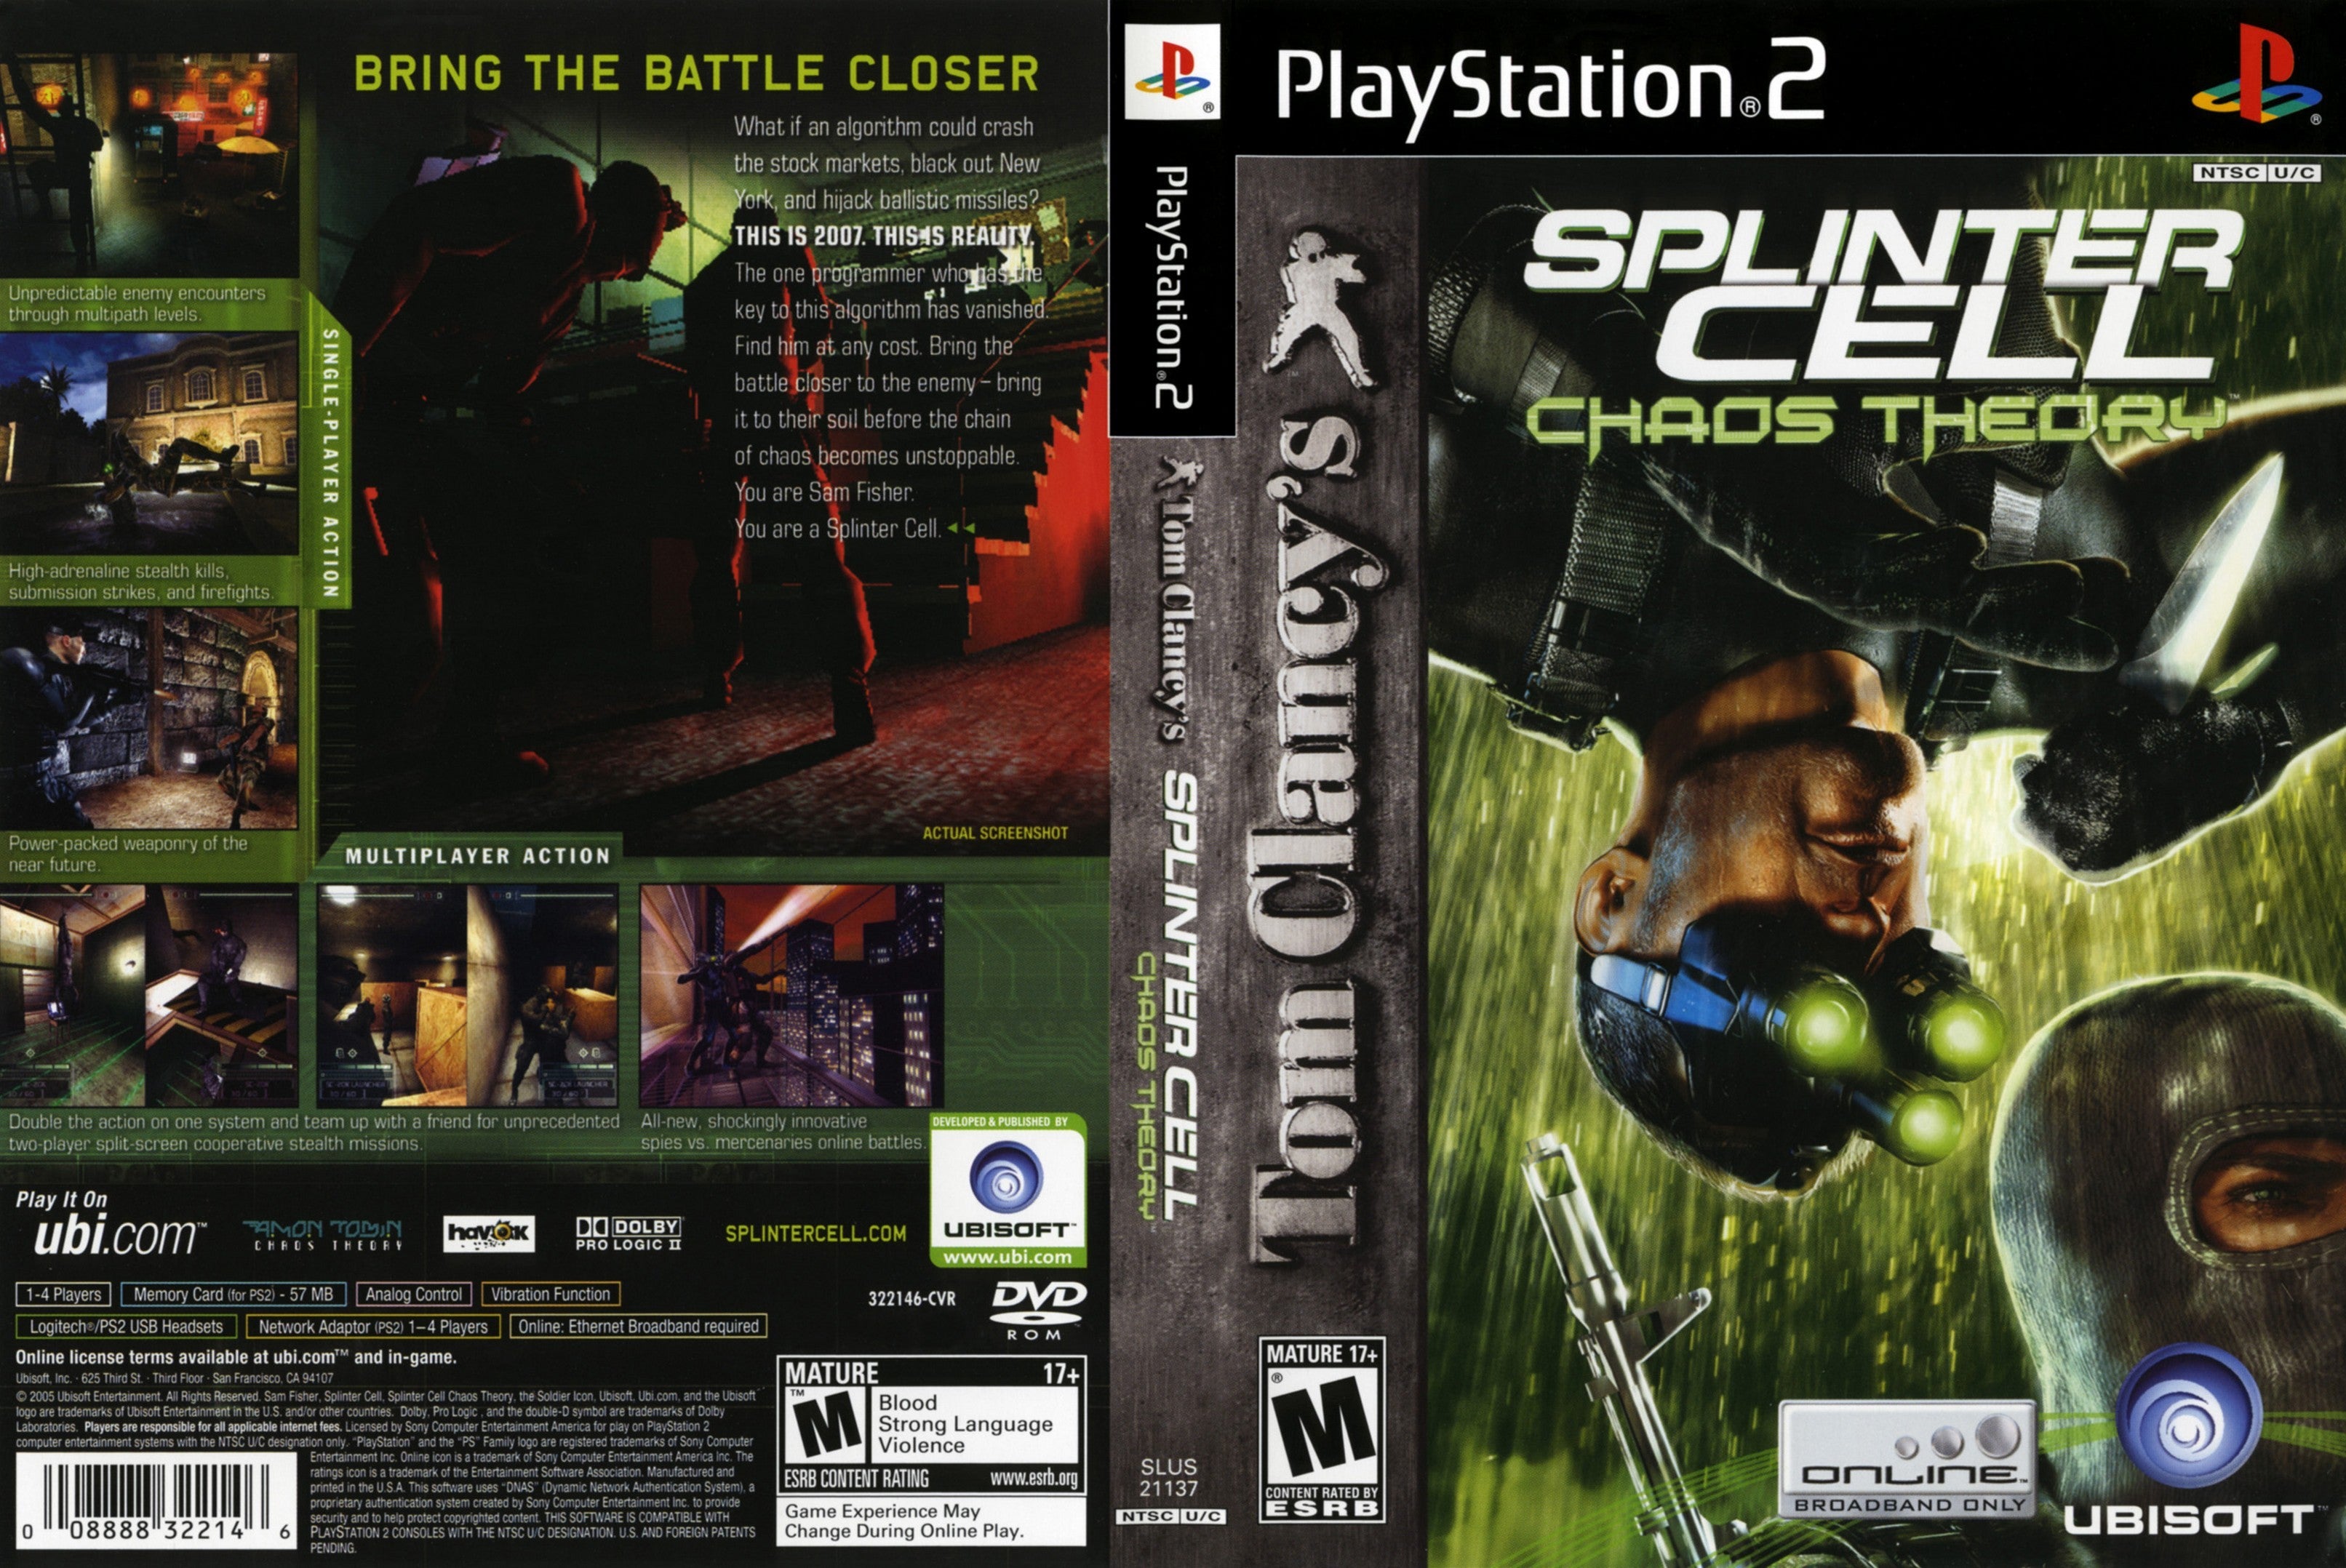 Tom Clancy's Splinter Cell Double Agent C PS2